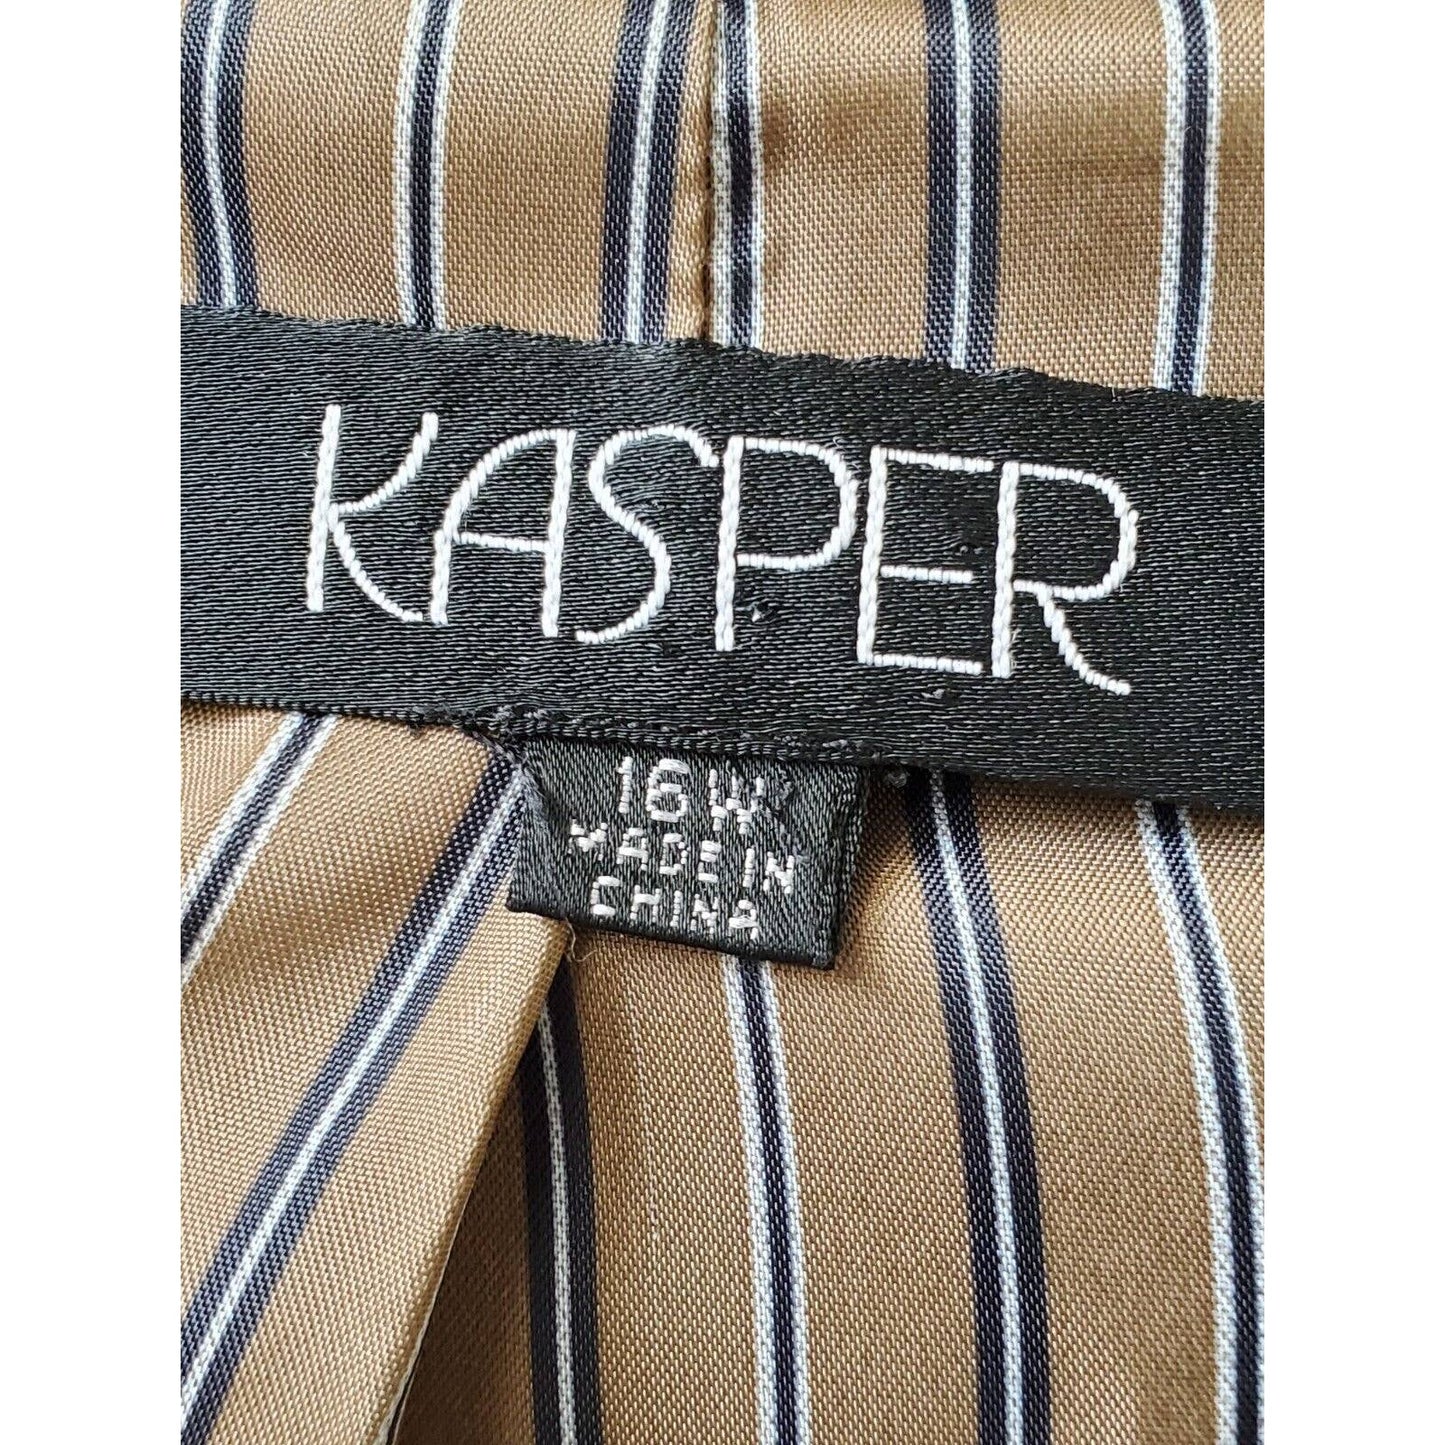 Kasper Womens Blue Polyester Single Breasted Blazer & Pant 2 Piece Suit Size 16W